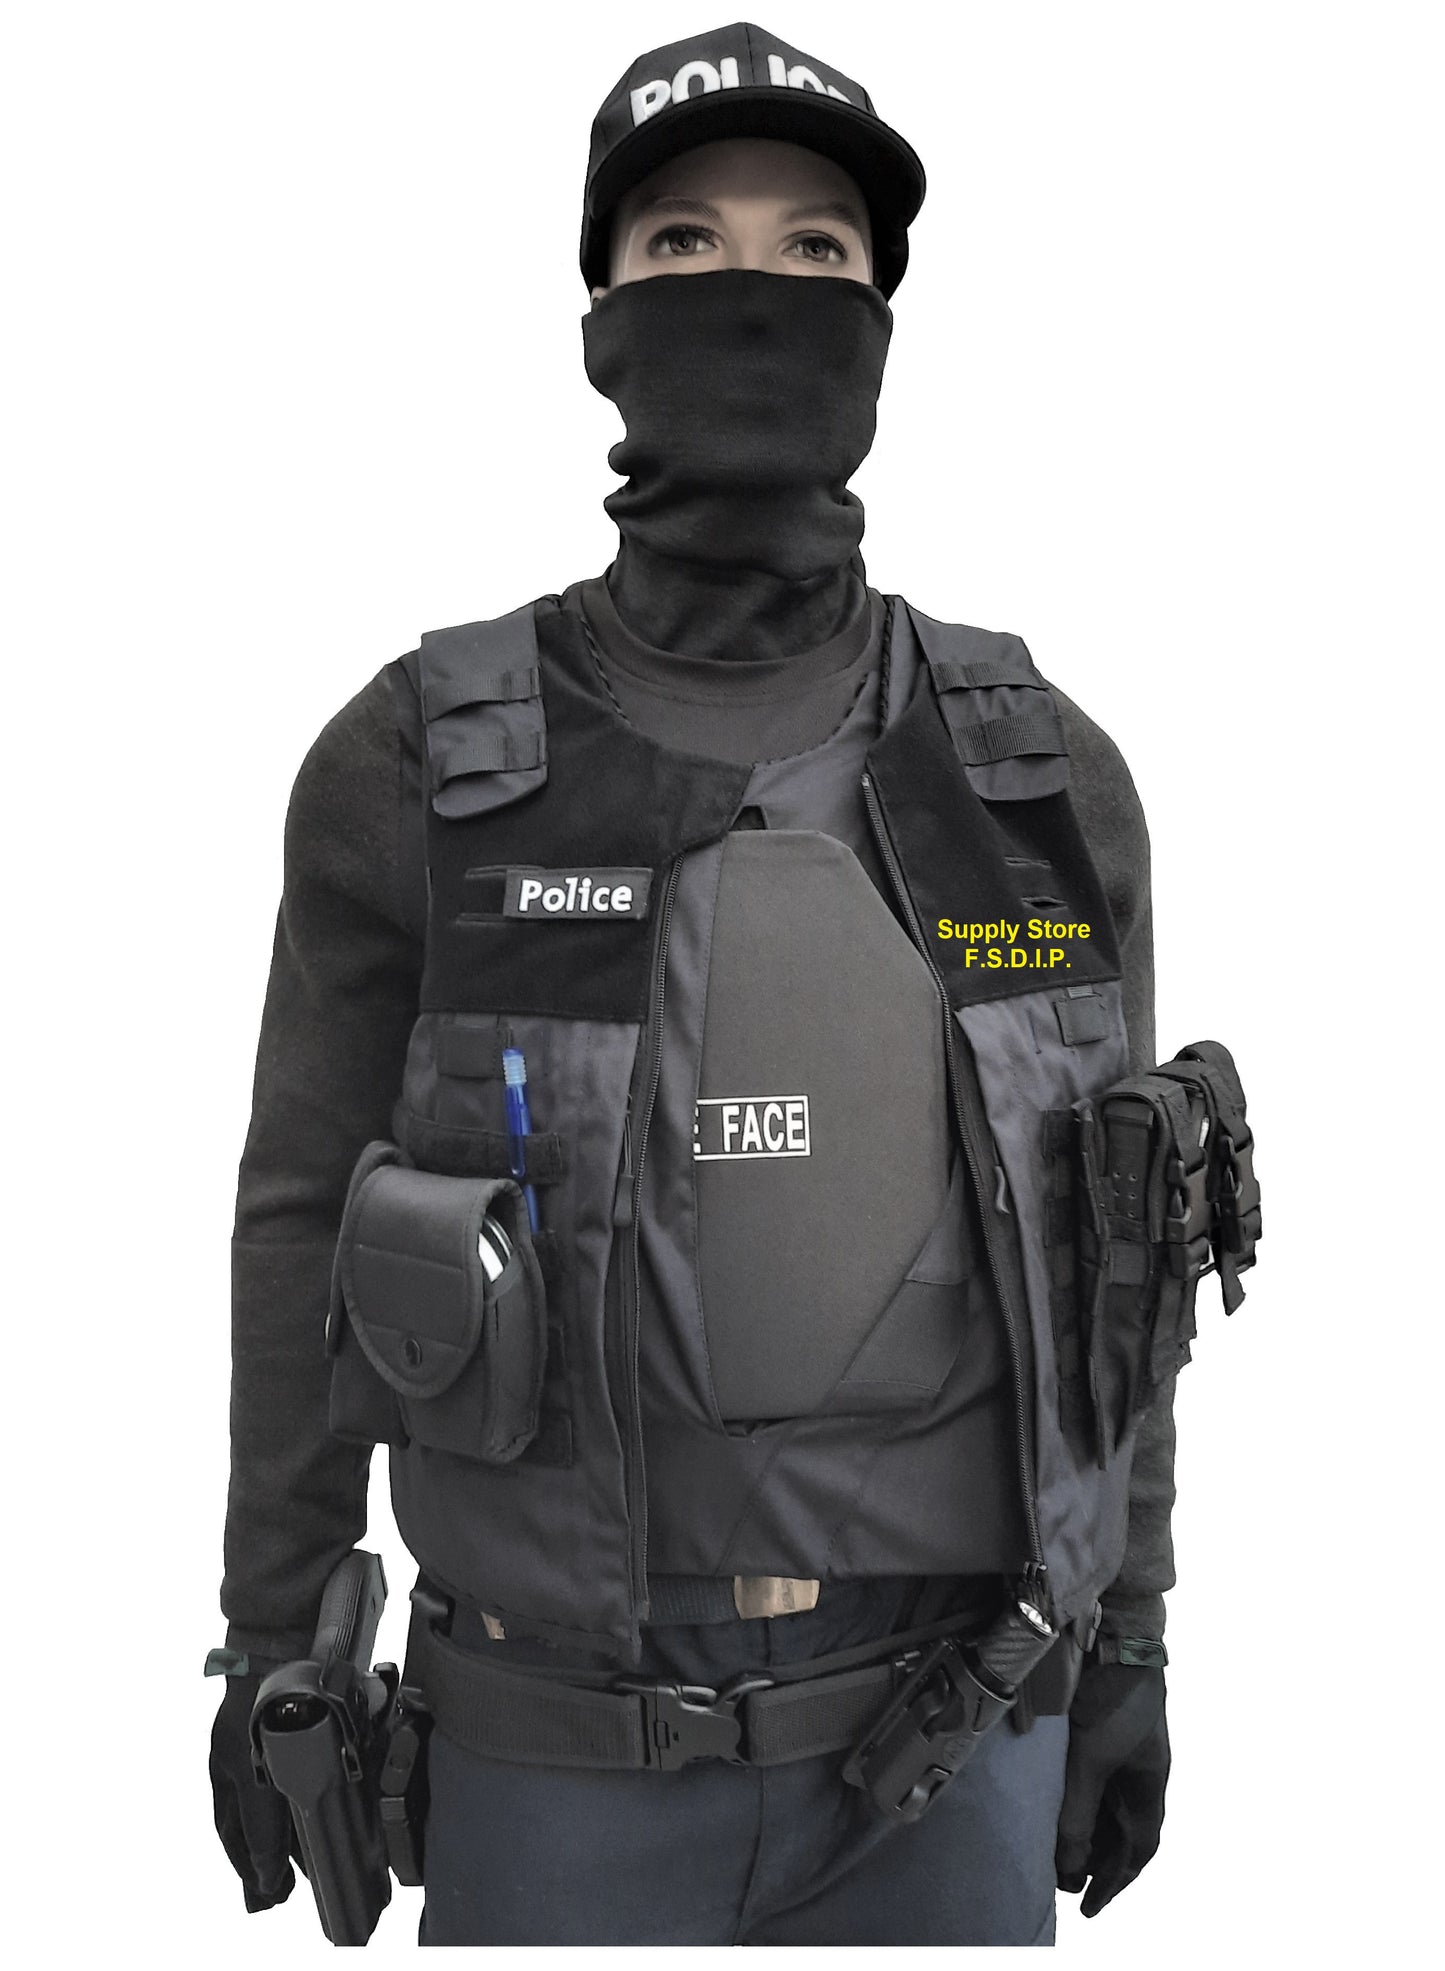 Kogelwerend vest FED politie België Molle H02-KR1-SP1+HO3 Sioen blauw